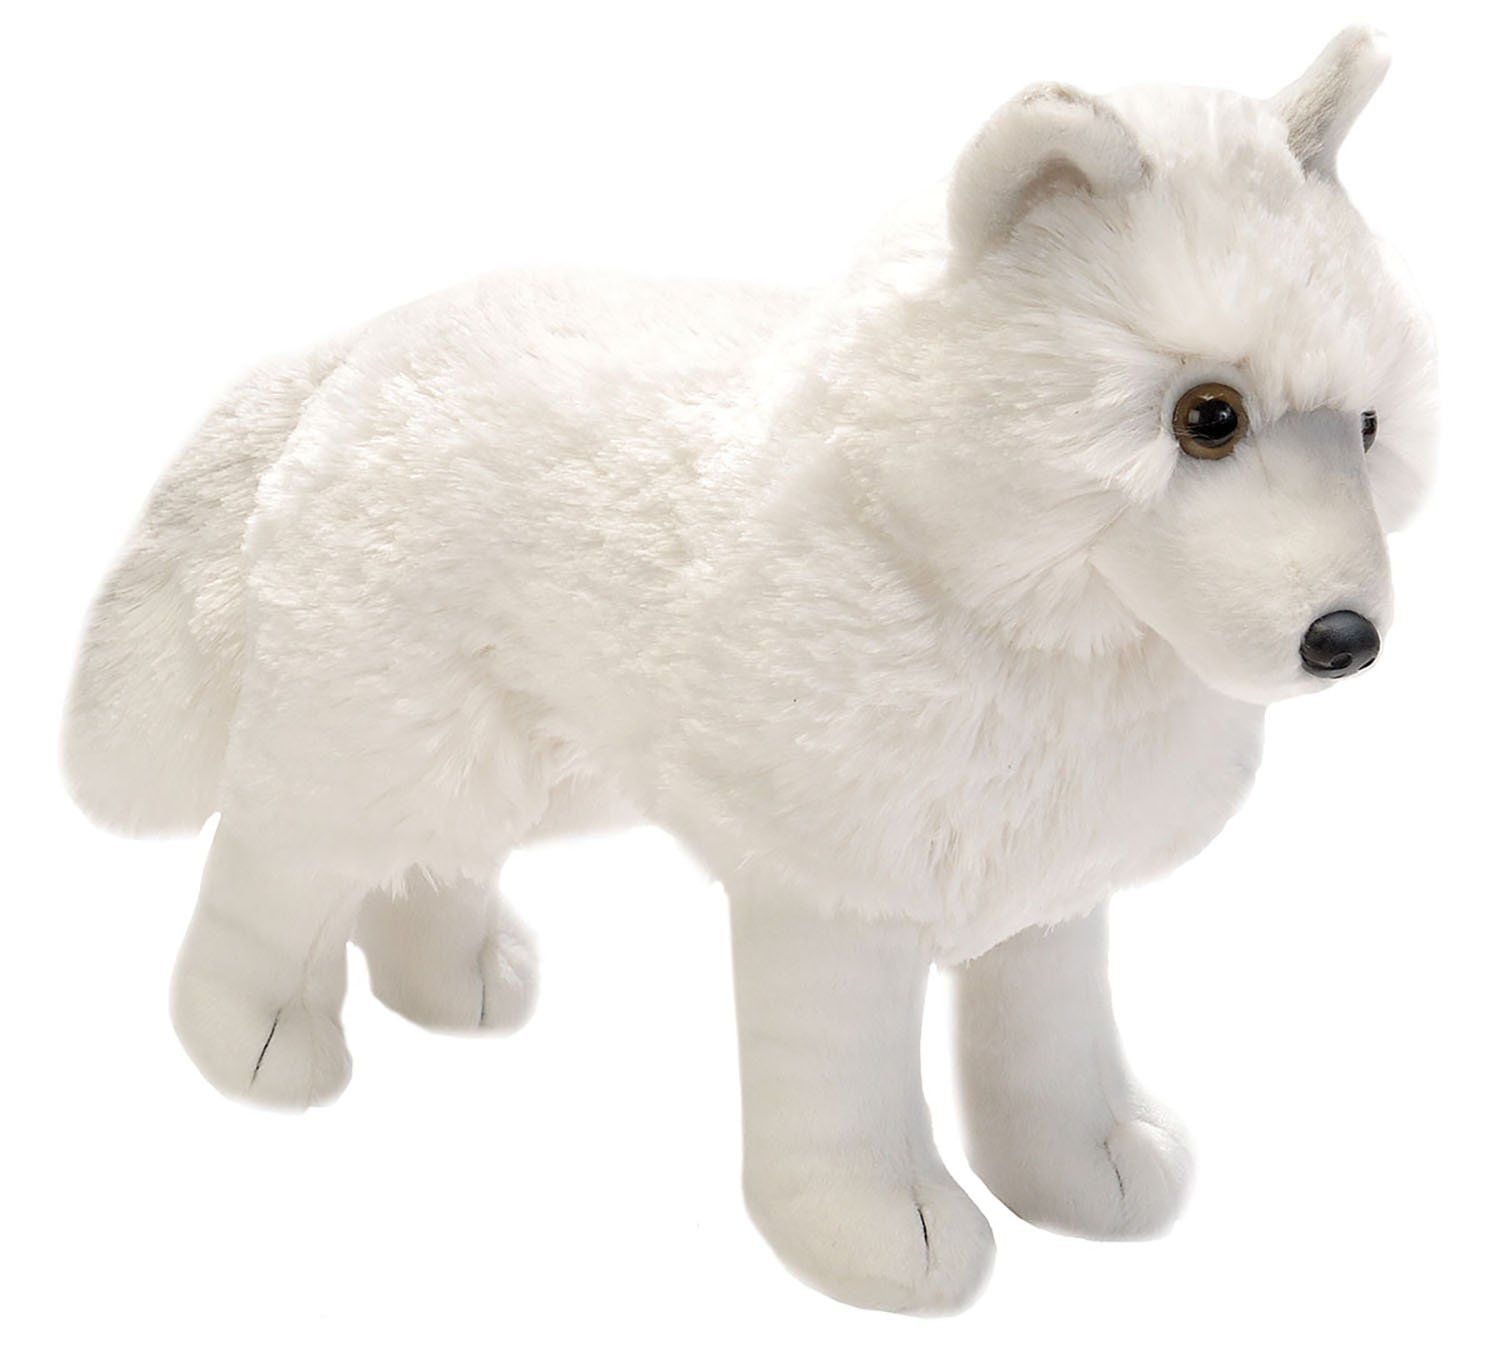 Wild Republic Wolf Plush Stuffed Animal Multicoloured for sale online